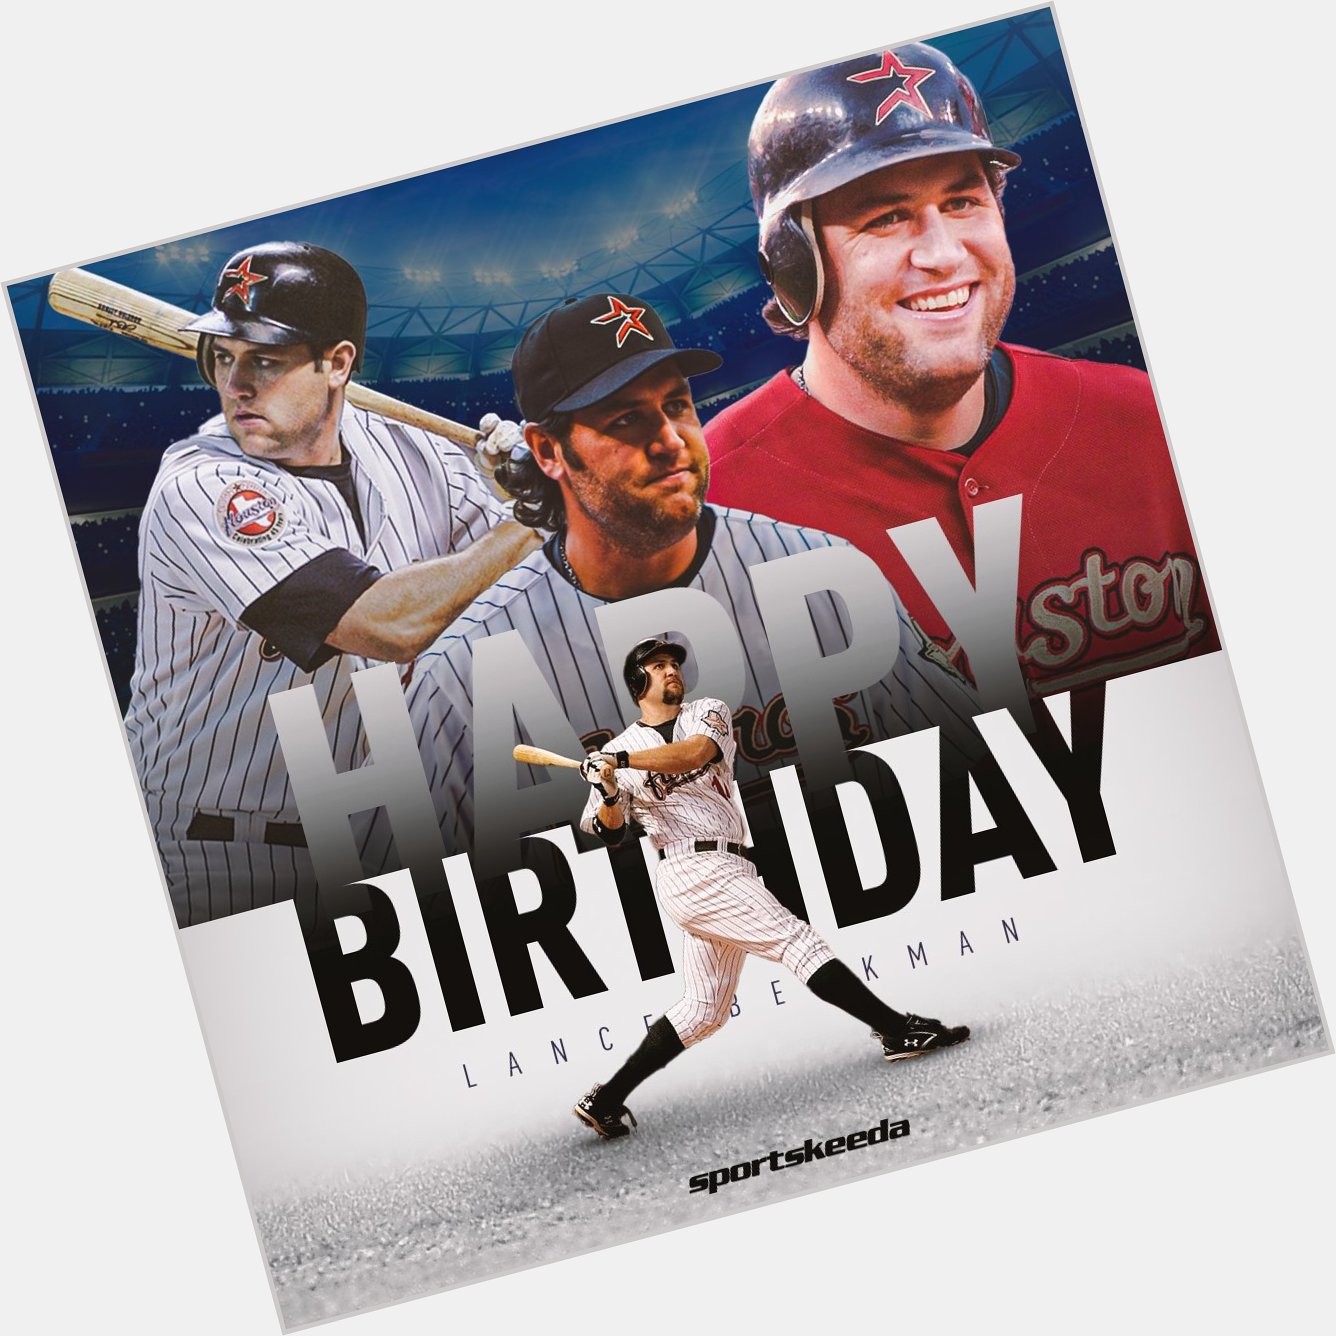 Happy Birthday to former switch hitter, Lance Berkman     2011 World Series Champion 6x All-Star 